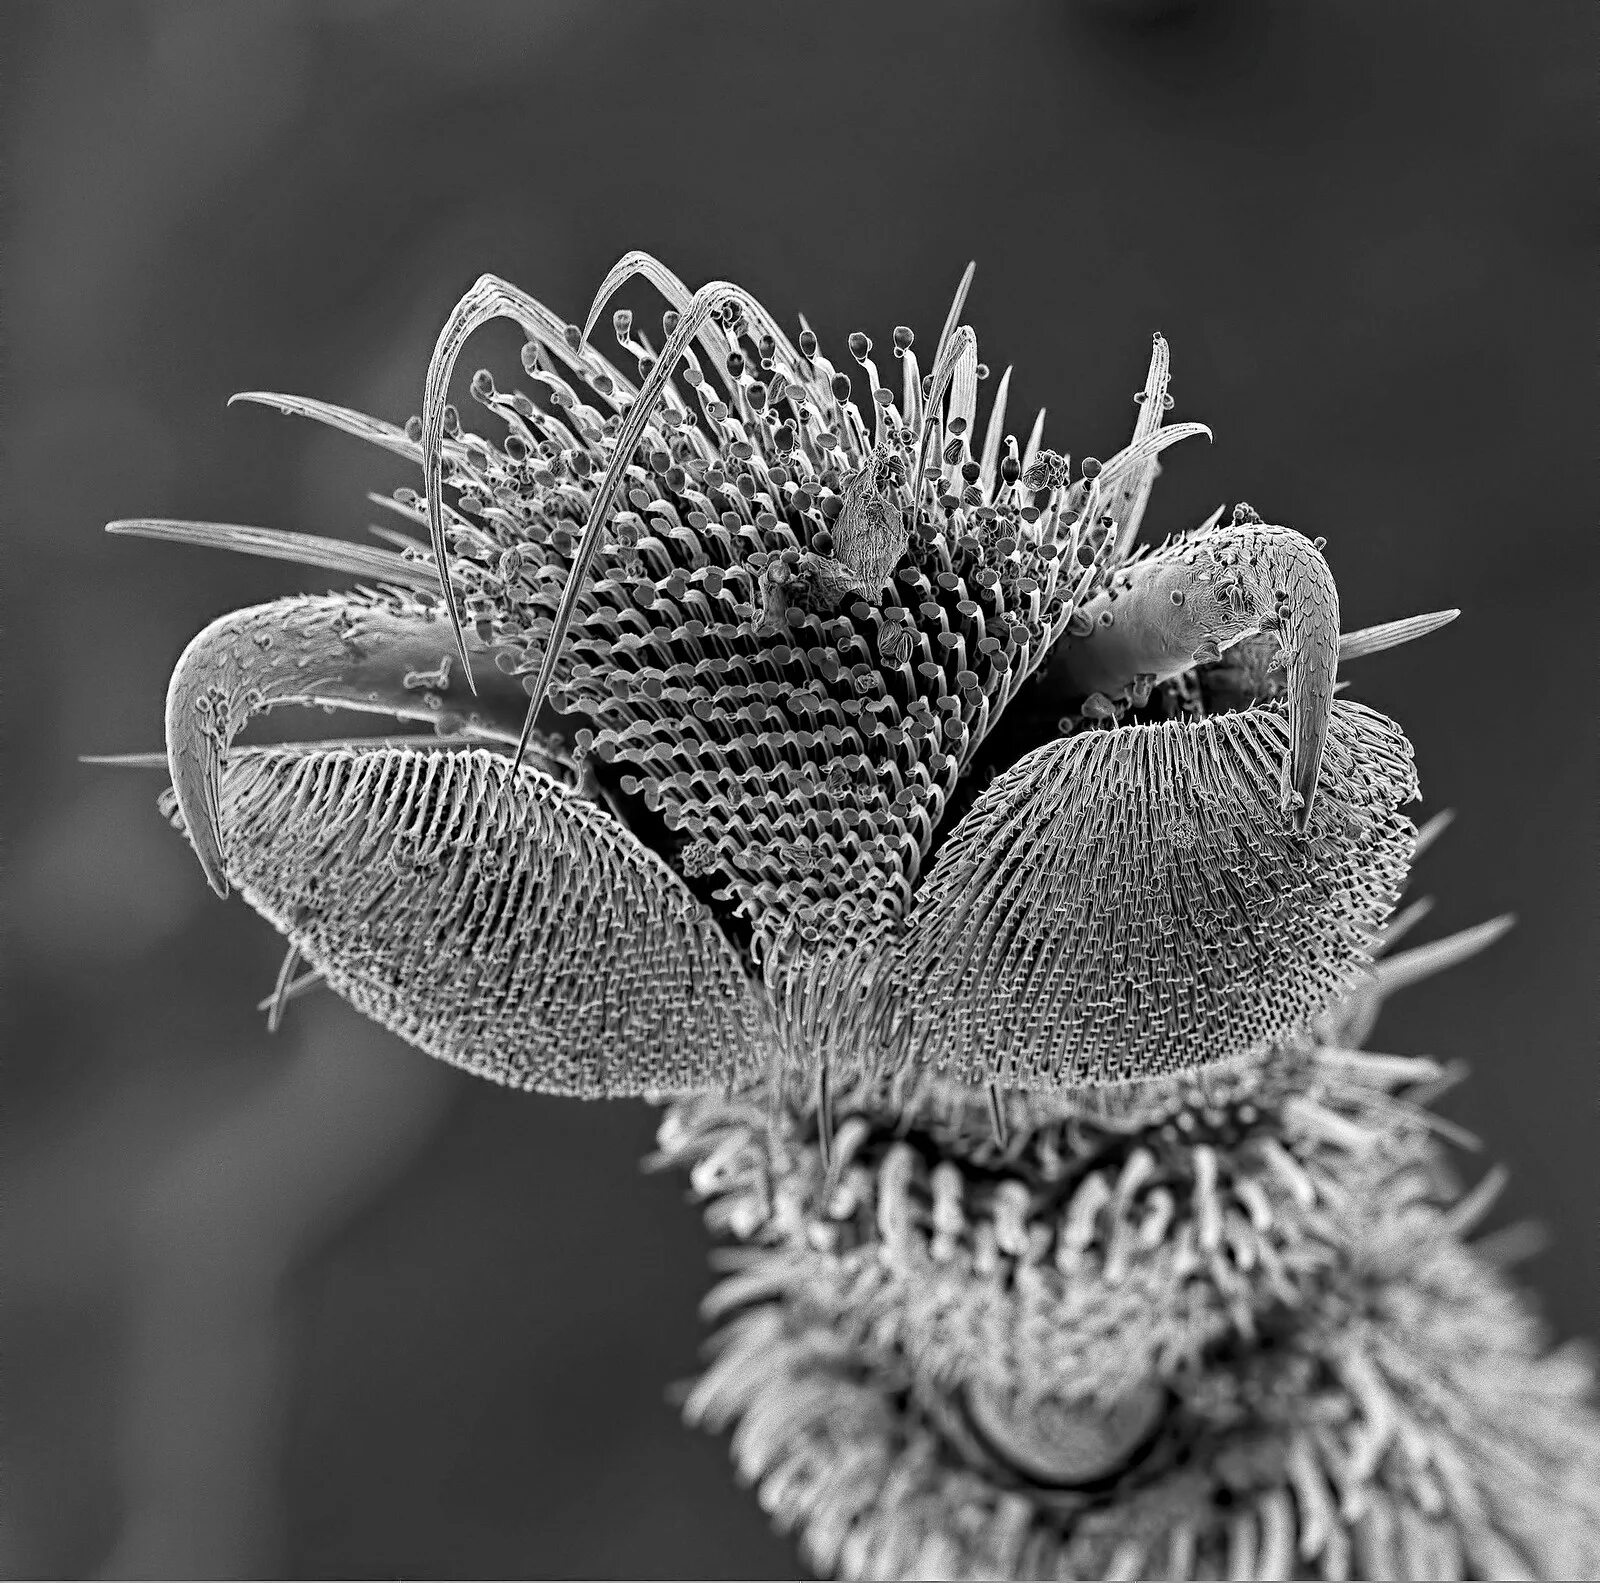 Лапка мухи под микроскопом. Муха под микроскопом. Лапы мухи под микроскопом. Лапка мухи в микроскопе. Лапки микроскопа